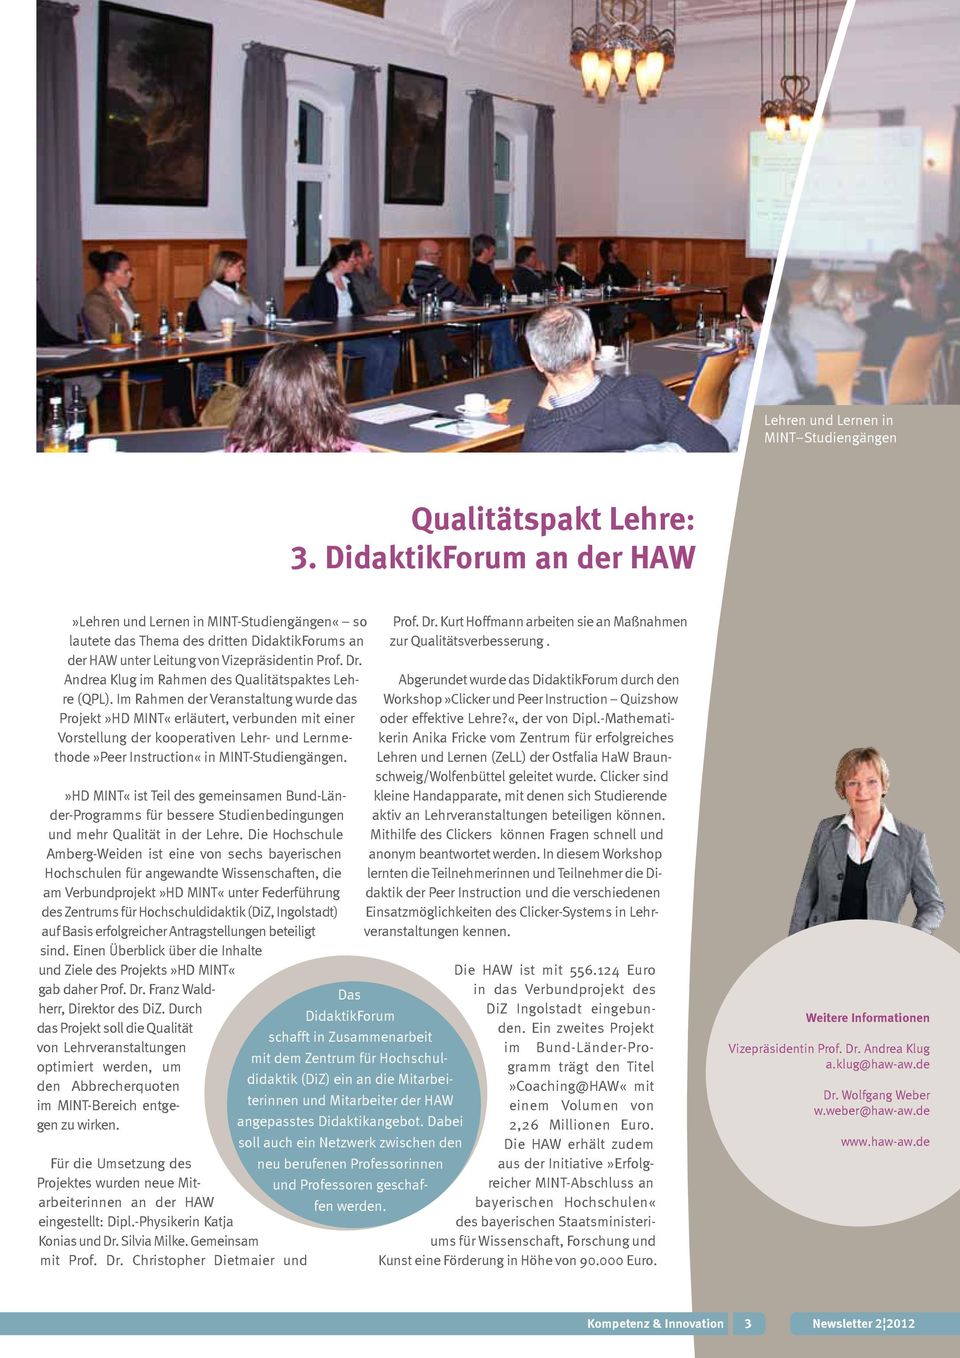 Andrea Klug im Rahmen des Qualitätspaktes Lehre (QPL).